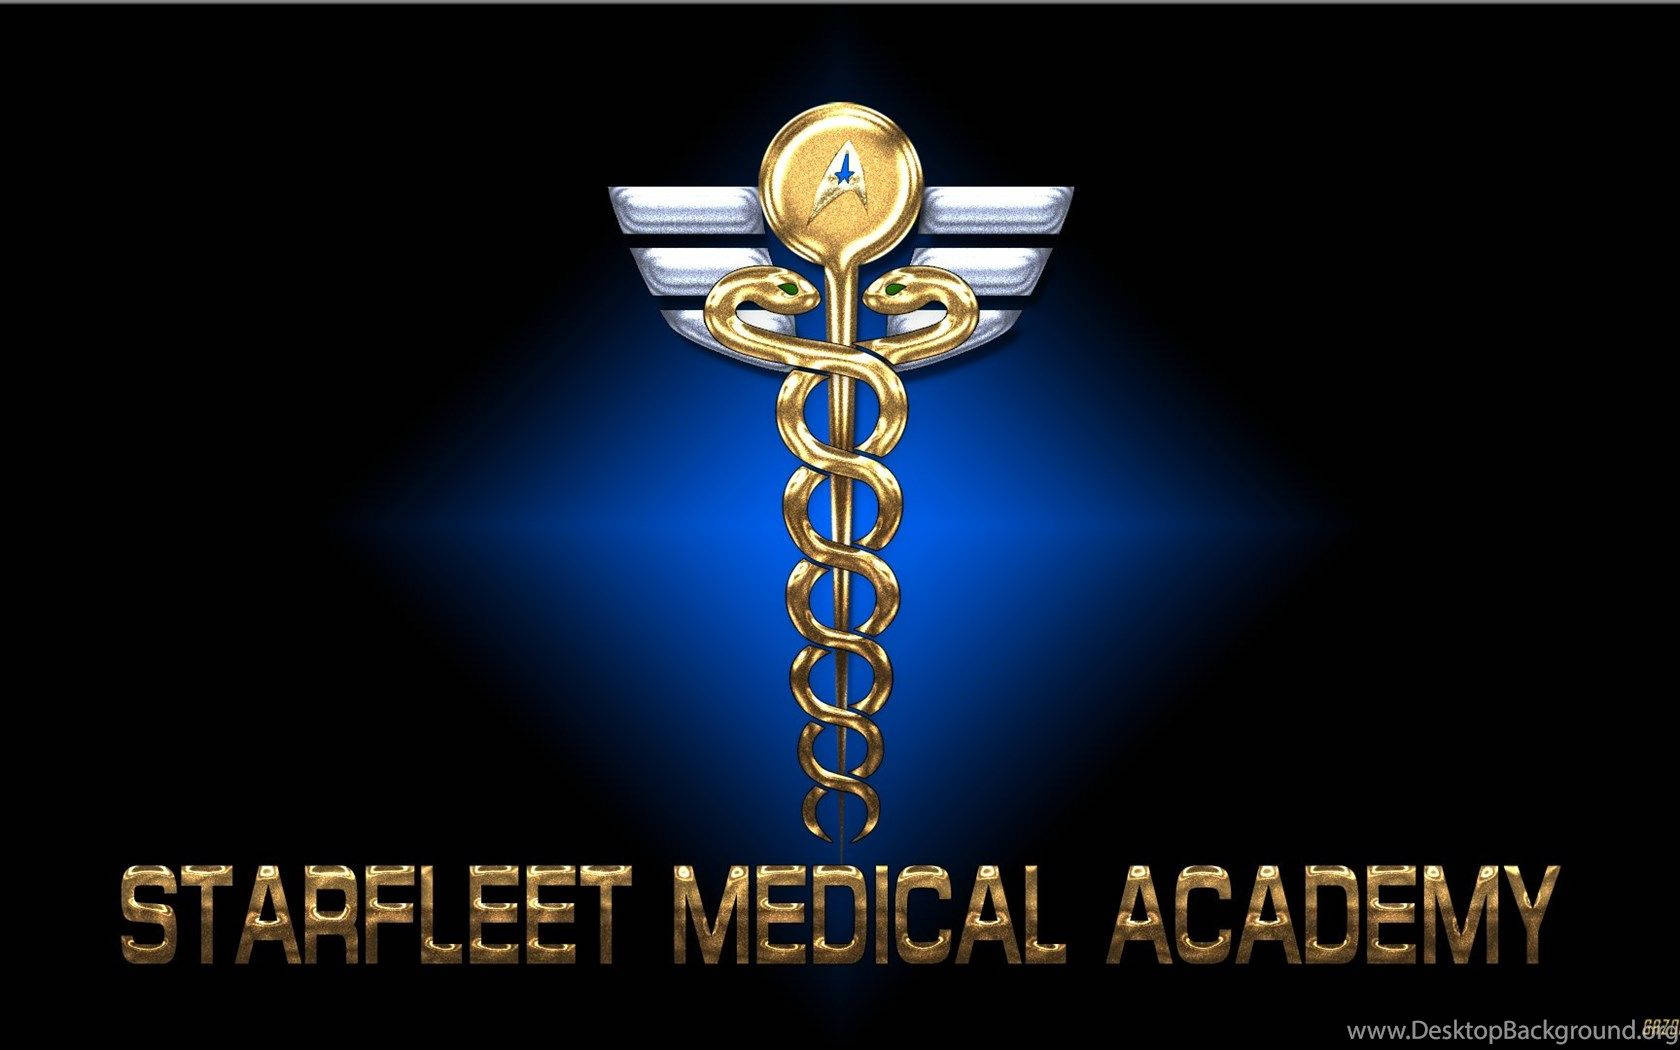 Starfleet Medicinsk Akademi Plakat: Star Trek fans vil elske denne stilfulde medicinske akademiplakat! Wallpaper